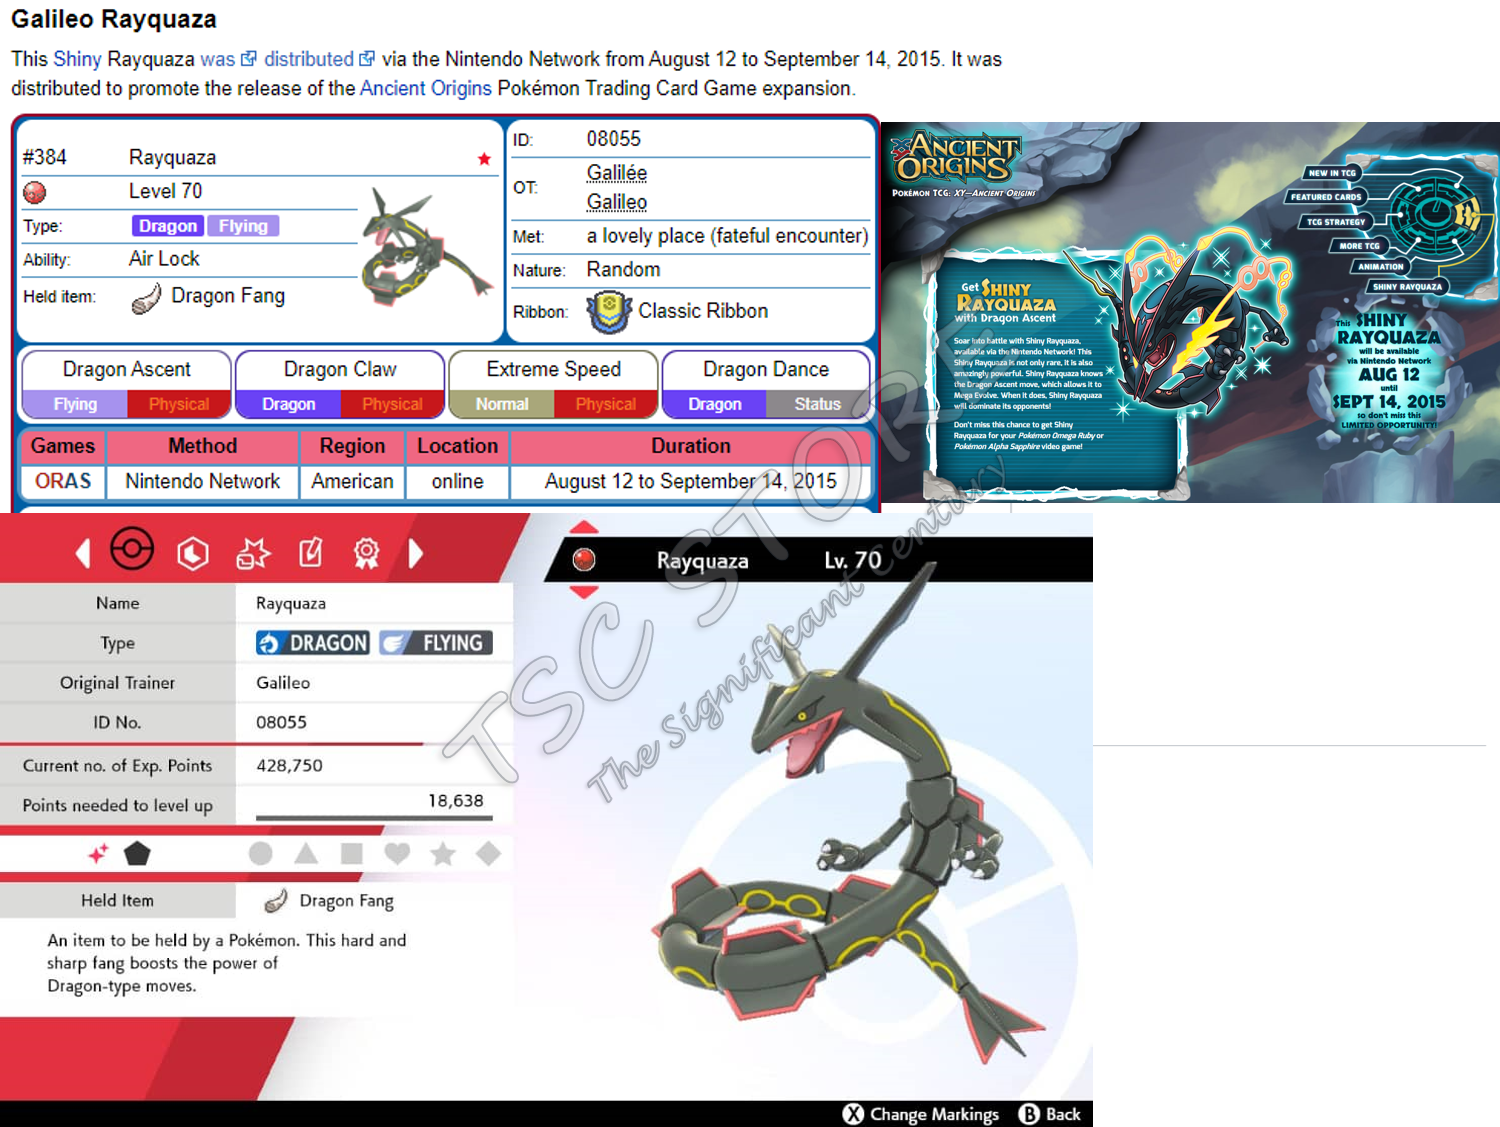 0547 ORAS - Galileo Shiny Rayquaza (ENG) - English - Project Pokemon Forums